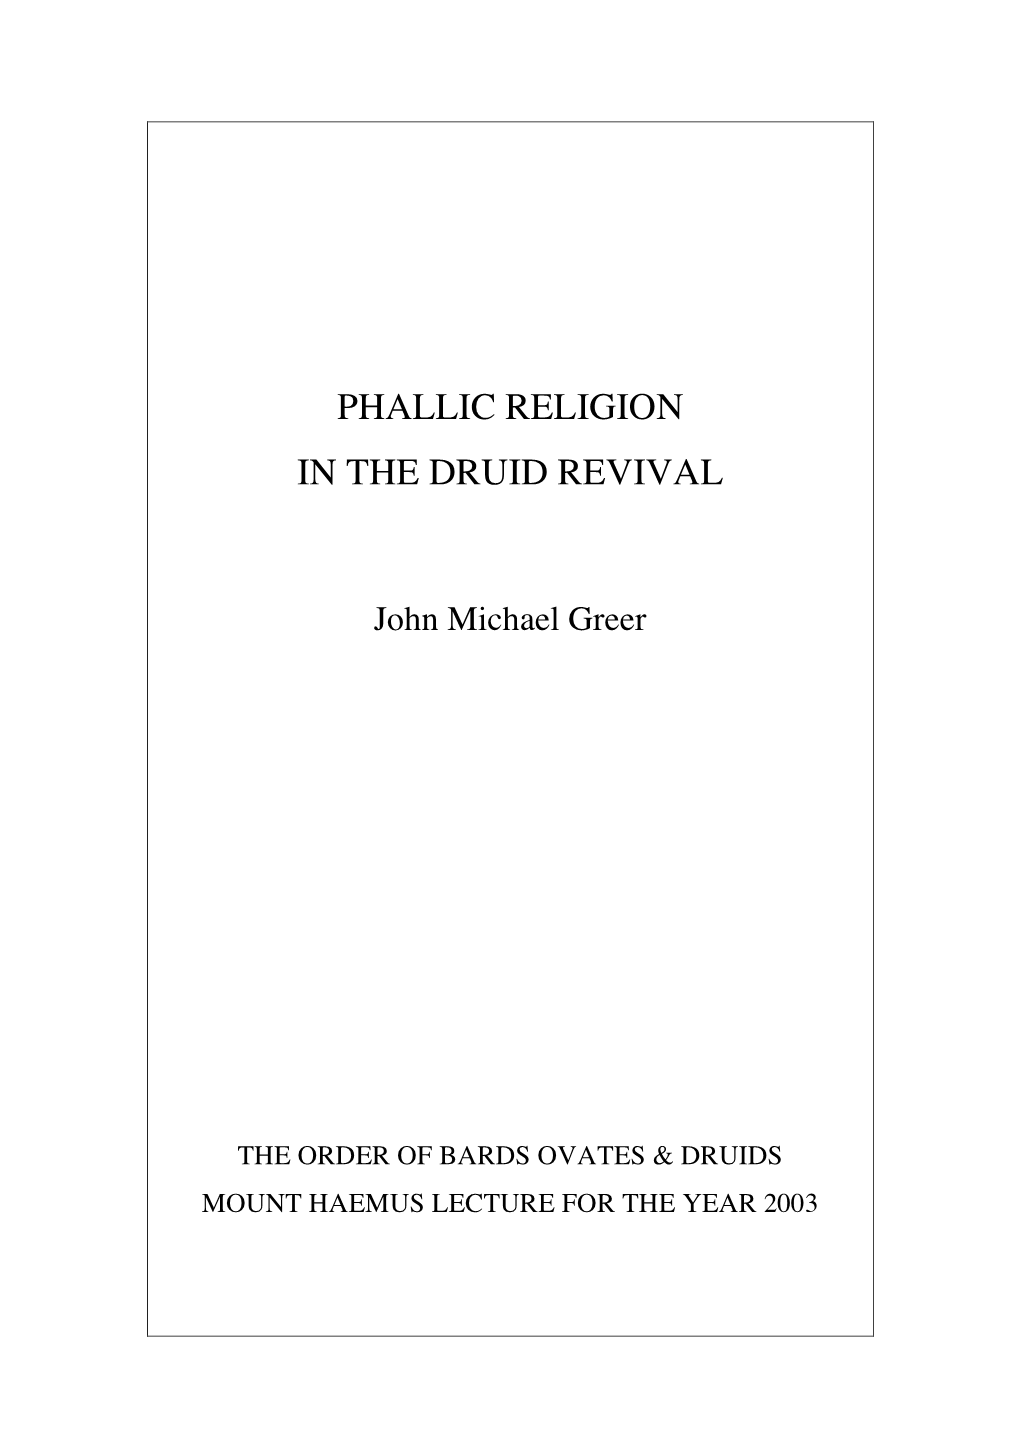 Phallic Religion in the Druid Revival